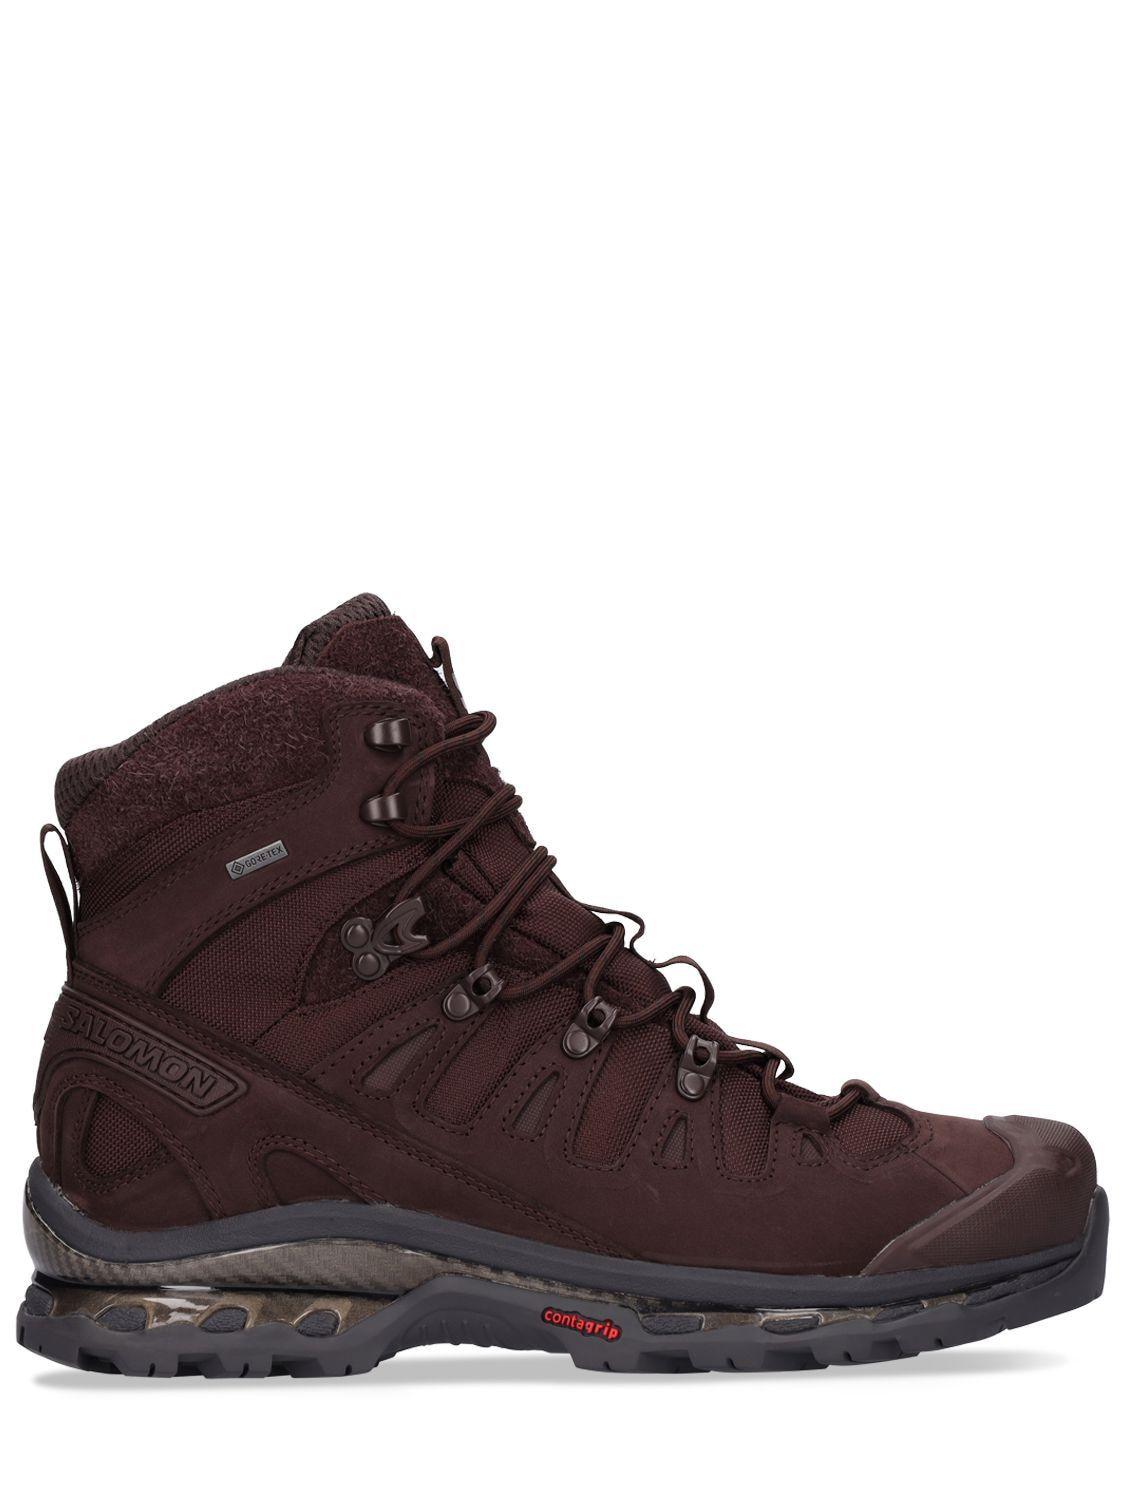 Salomon Quest 4d Gore-tex (r) Advanced Boots in Brown for Men | Lyst